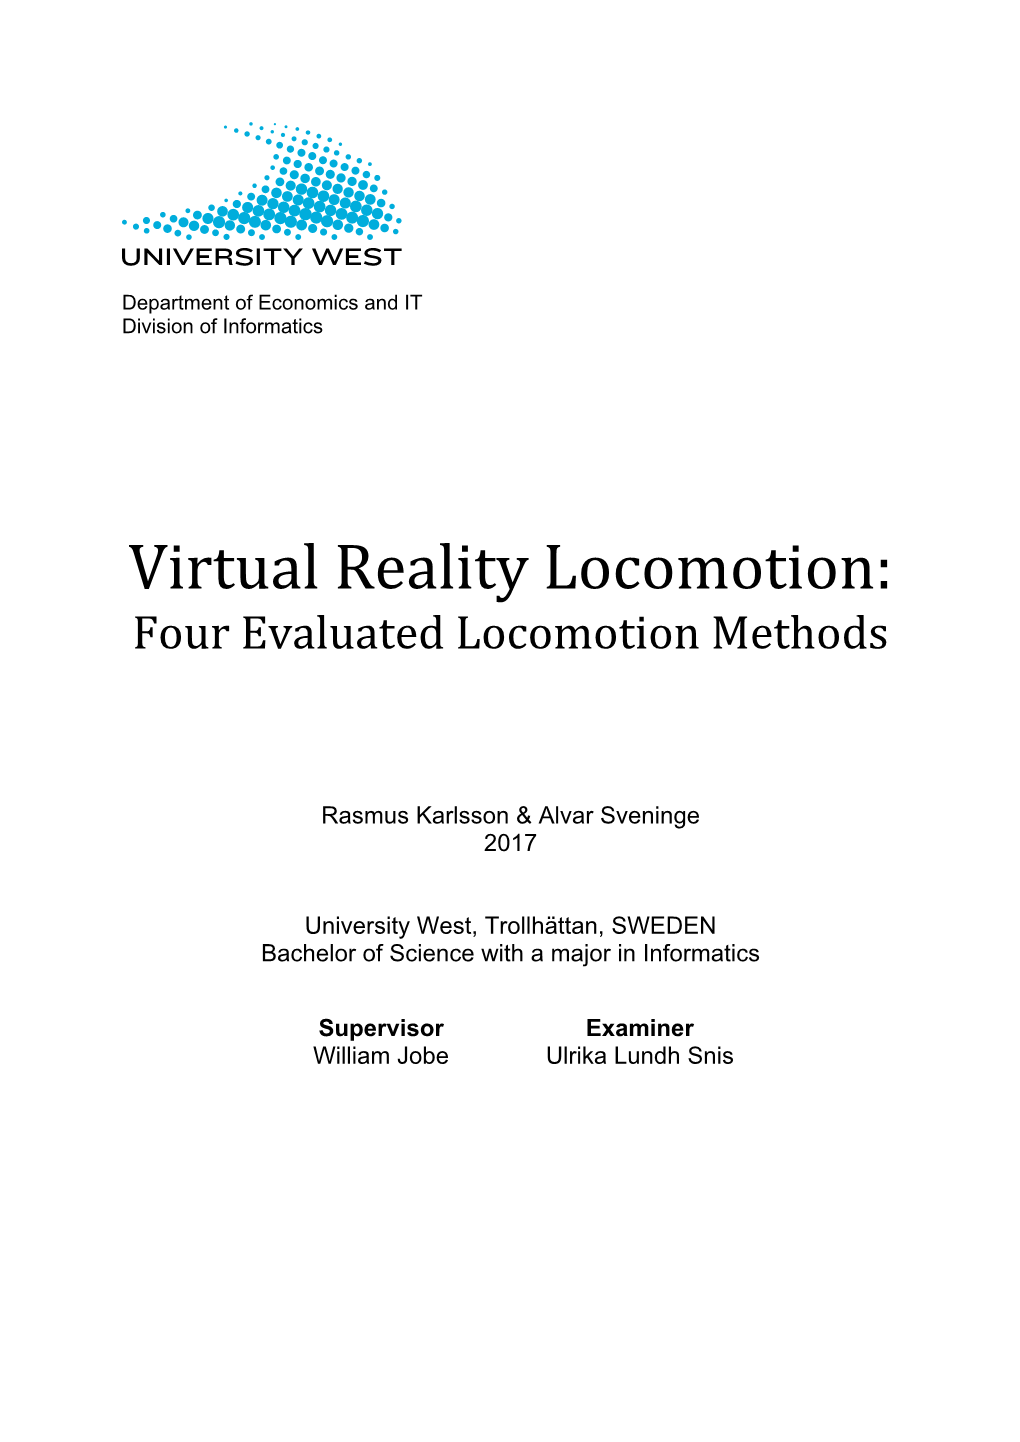 Virtual Reality Locomotion: Four Evaluated Locomotion Methods